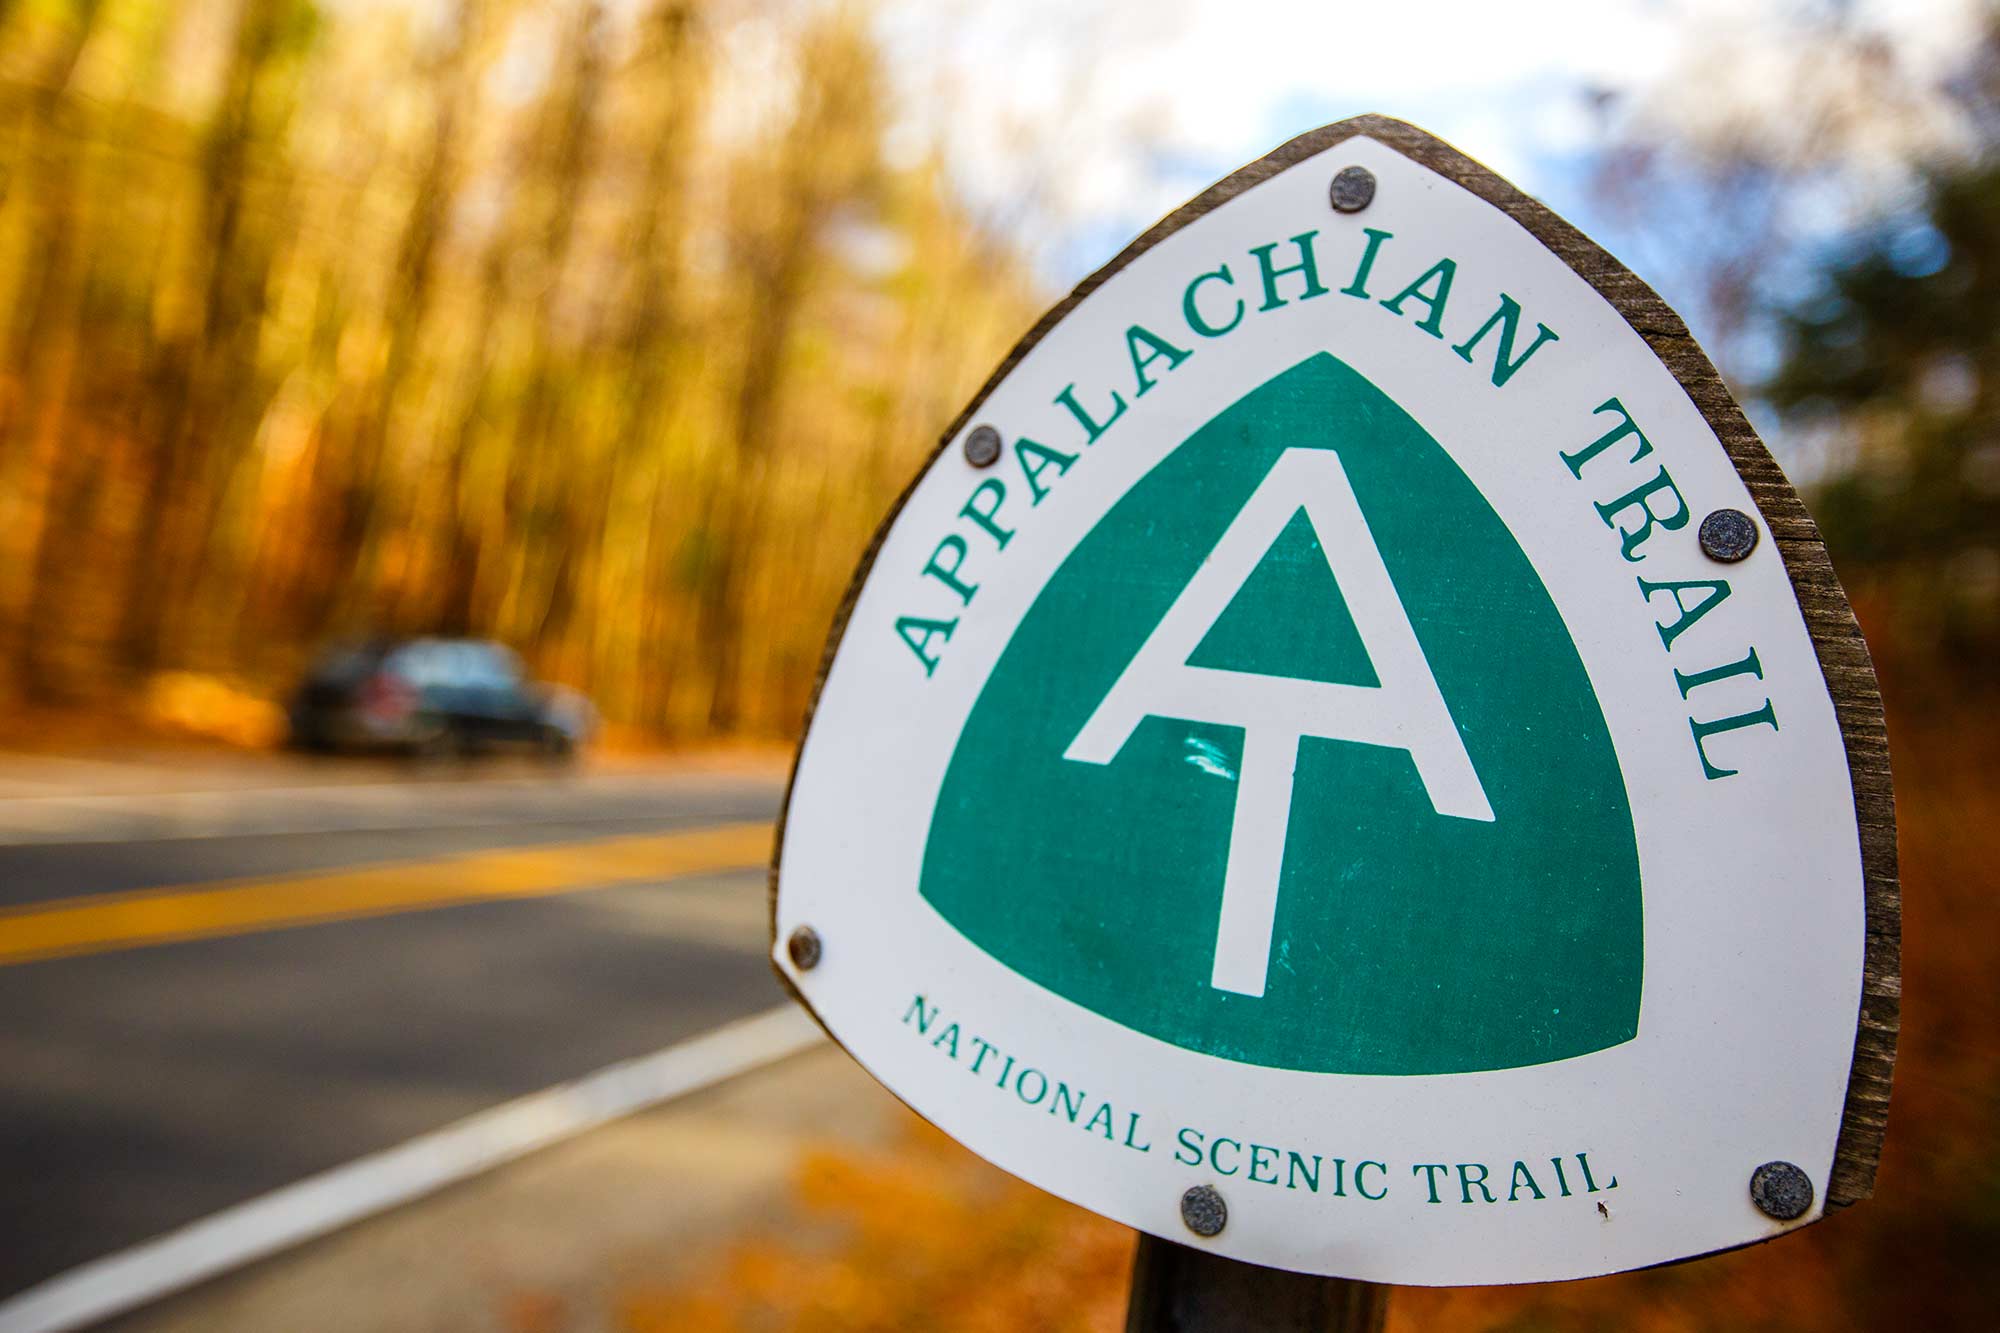 Appalachian Trail, Great Barrington, MA - 11/8